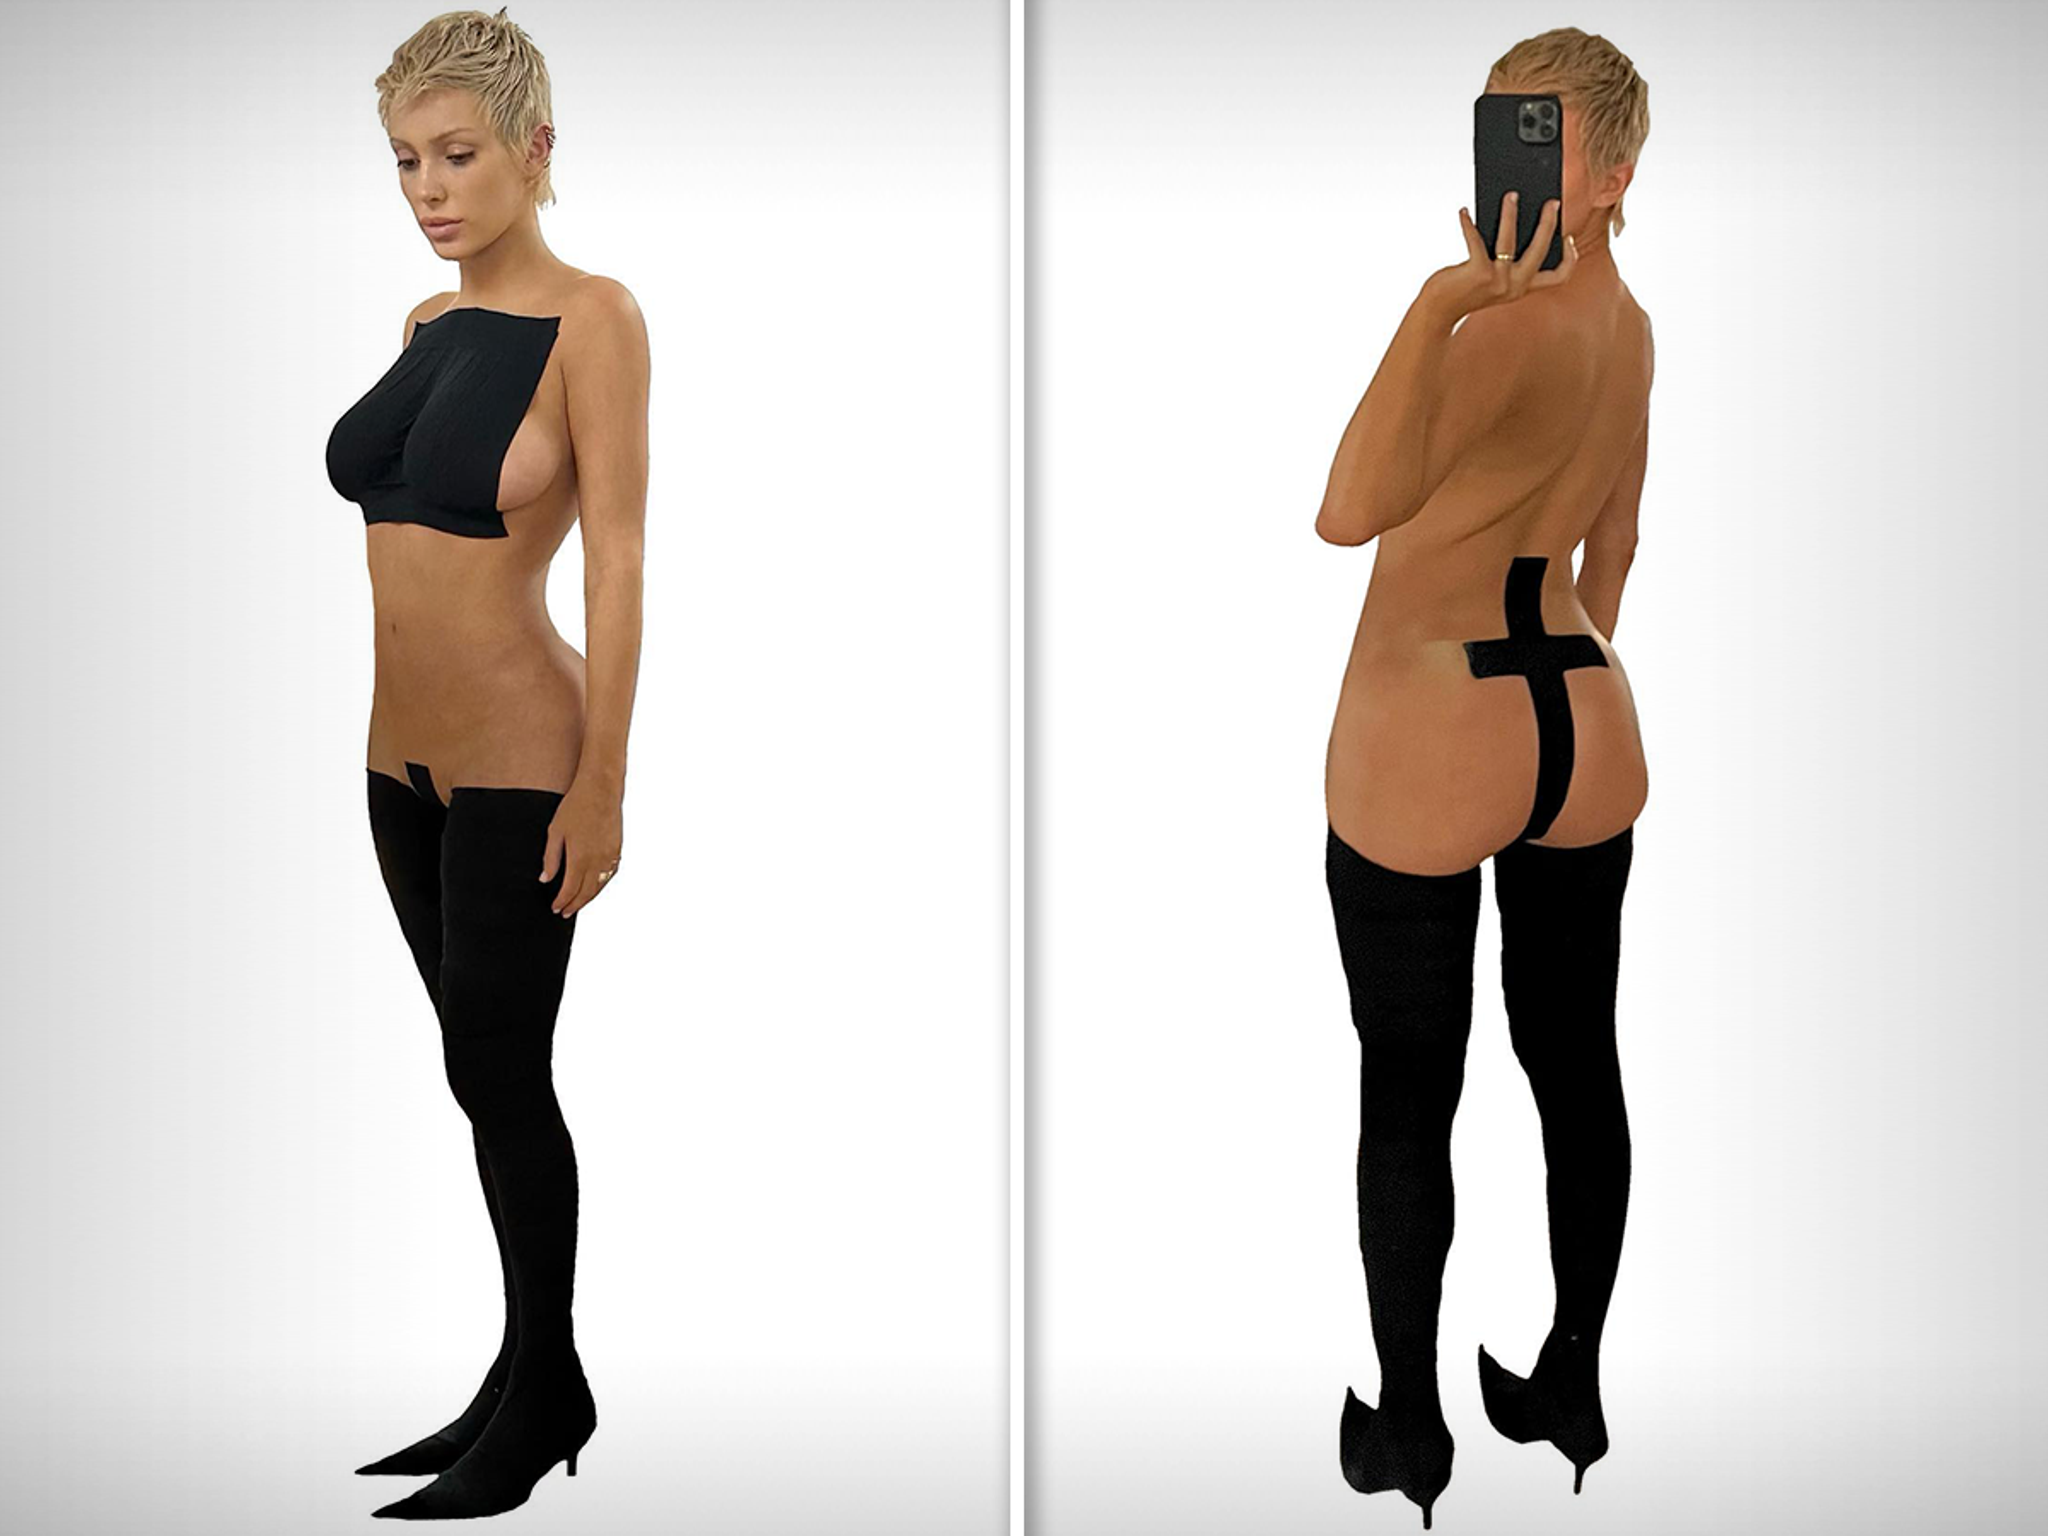 Kanye Wests Wife Bianca Censori Nearly Nude, Models New Fashion Line image